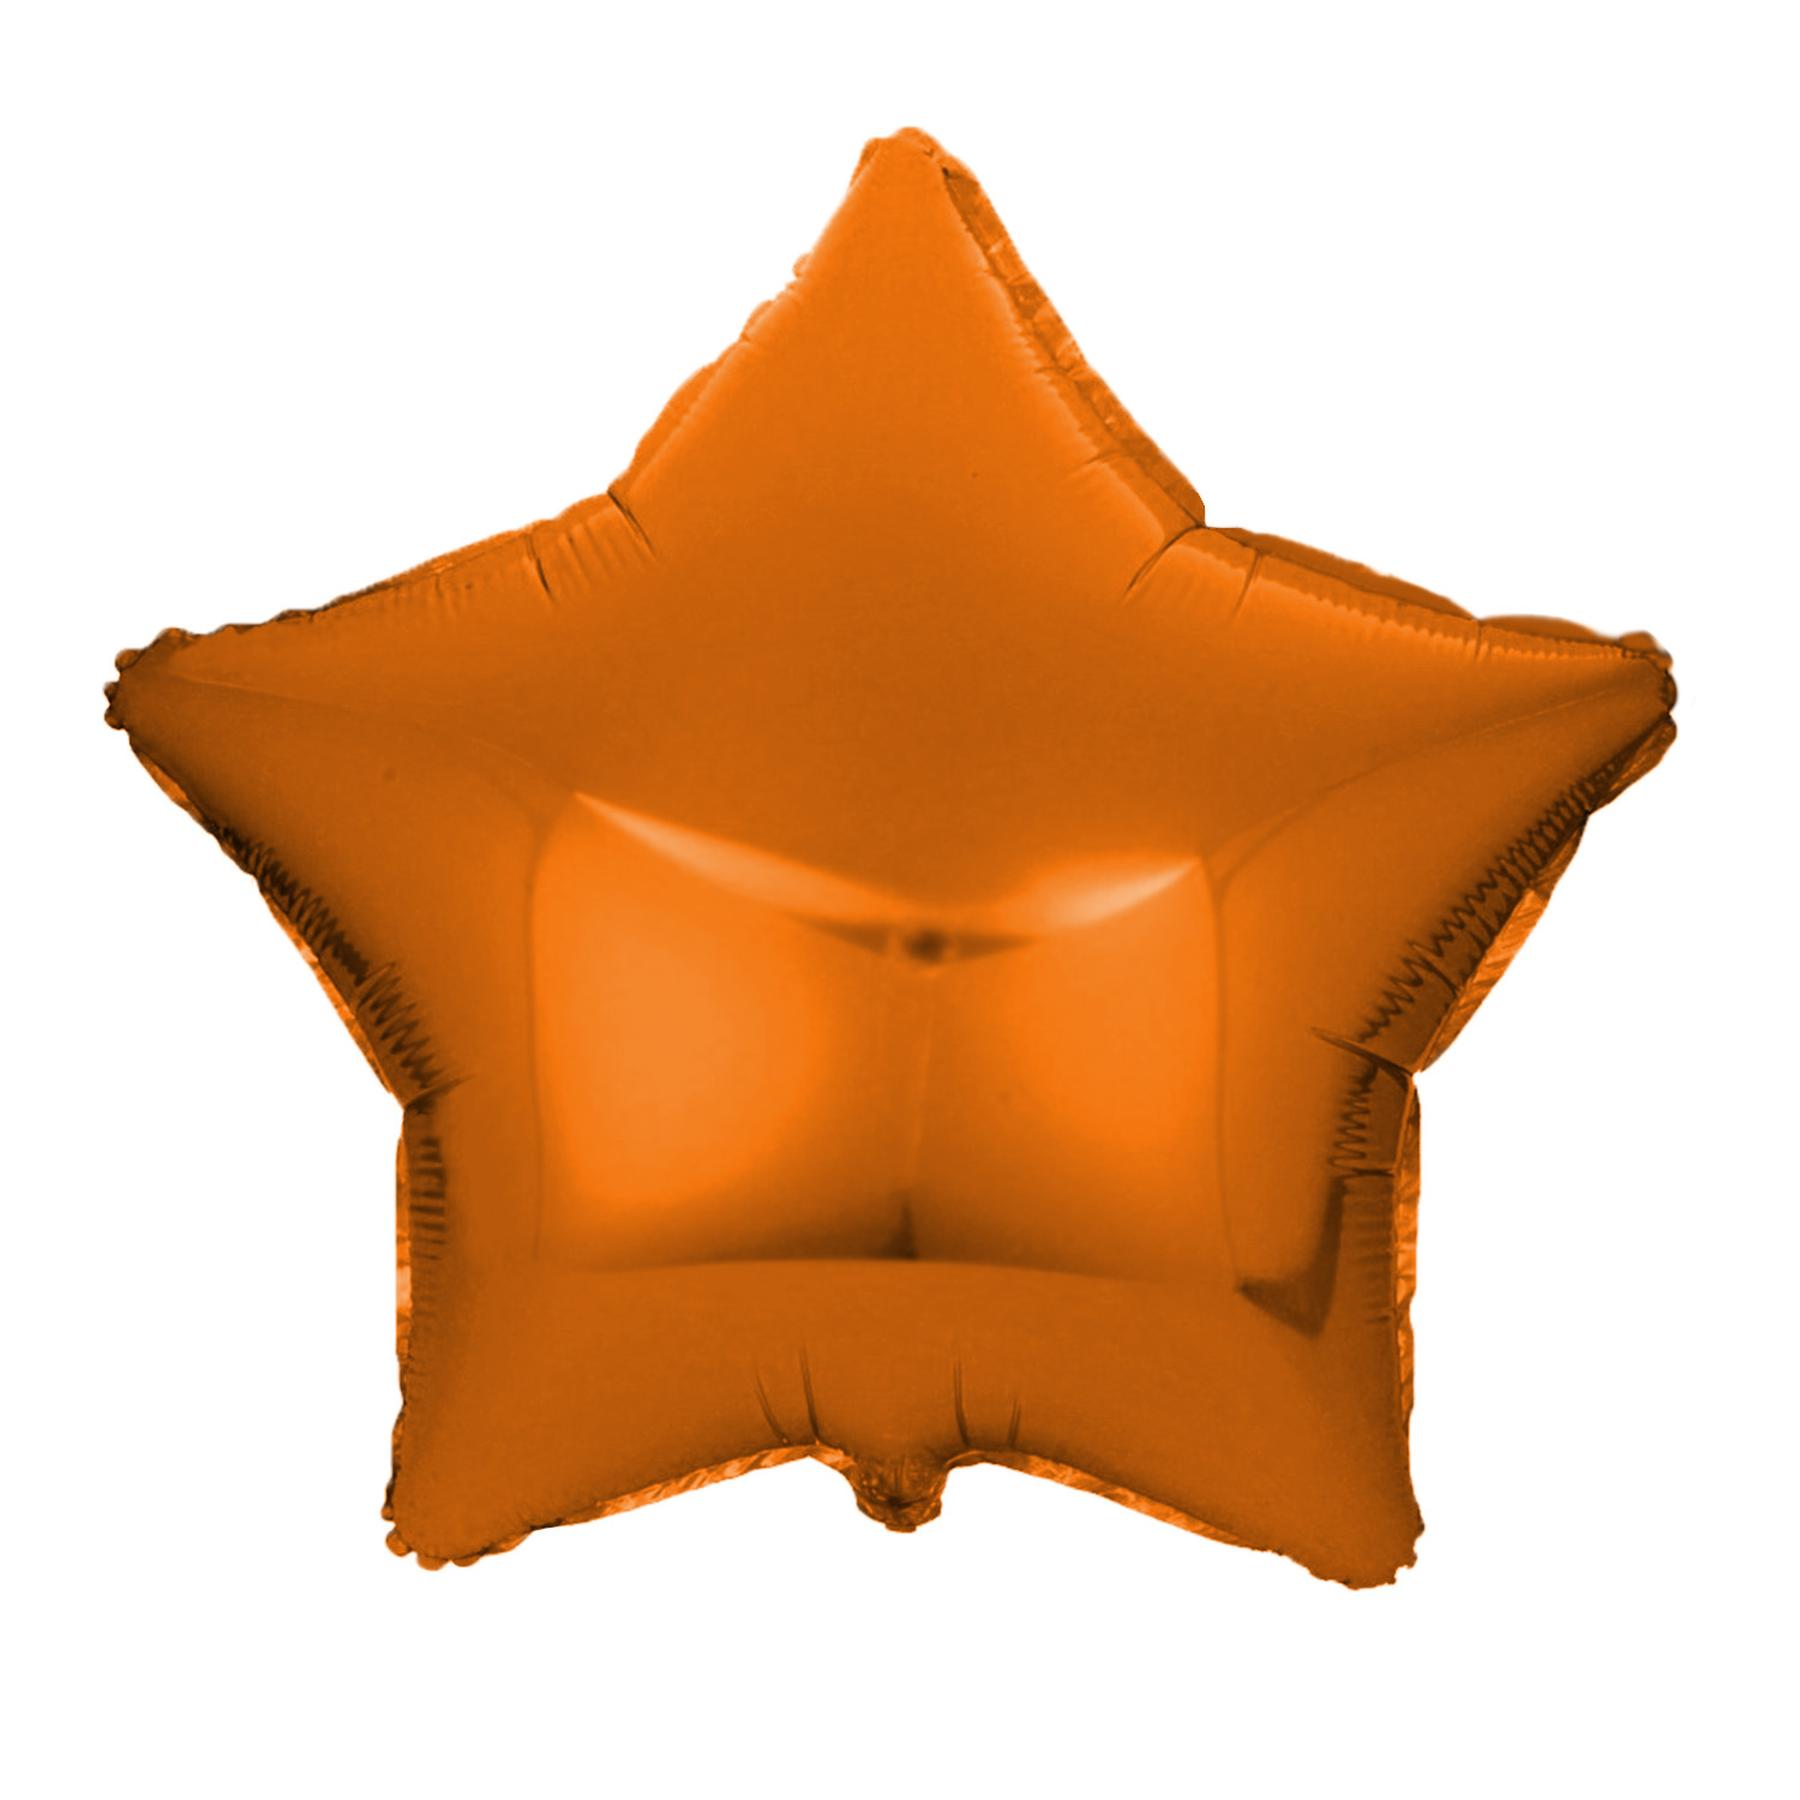 Folienballon Stern, orange / bronze, ca. 45 cm